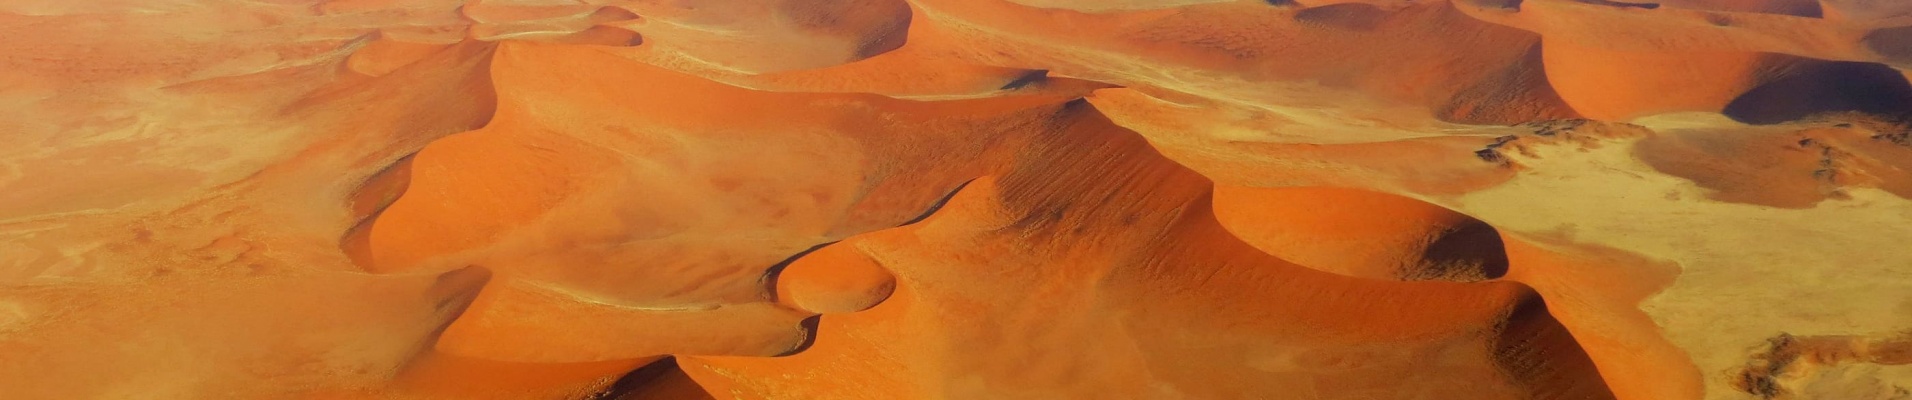 desert-namib